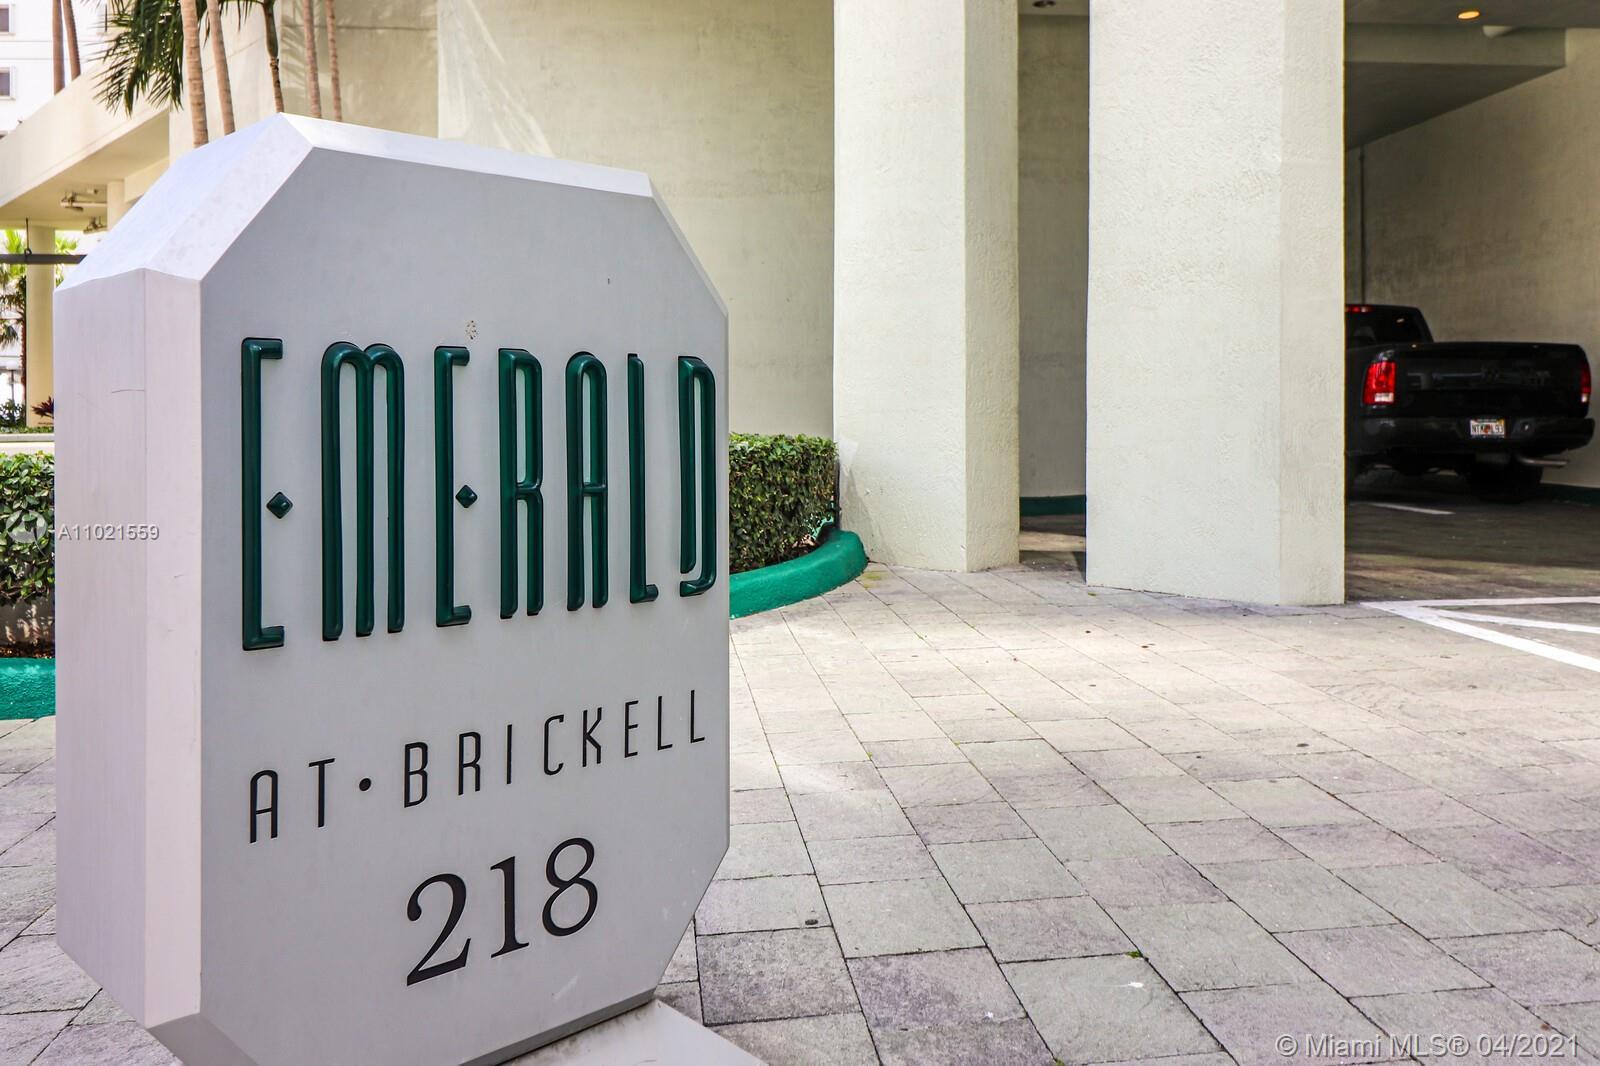 Emerald at Brickell - Condos for sale